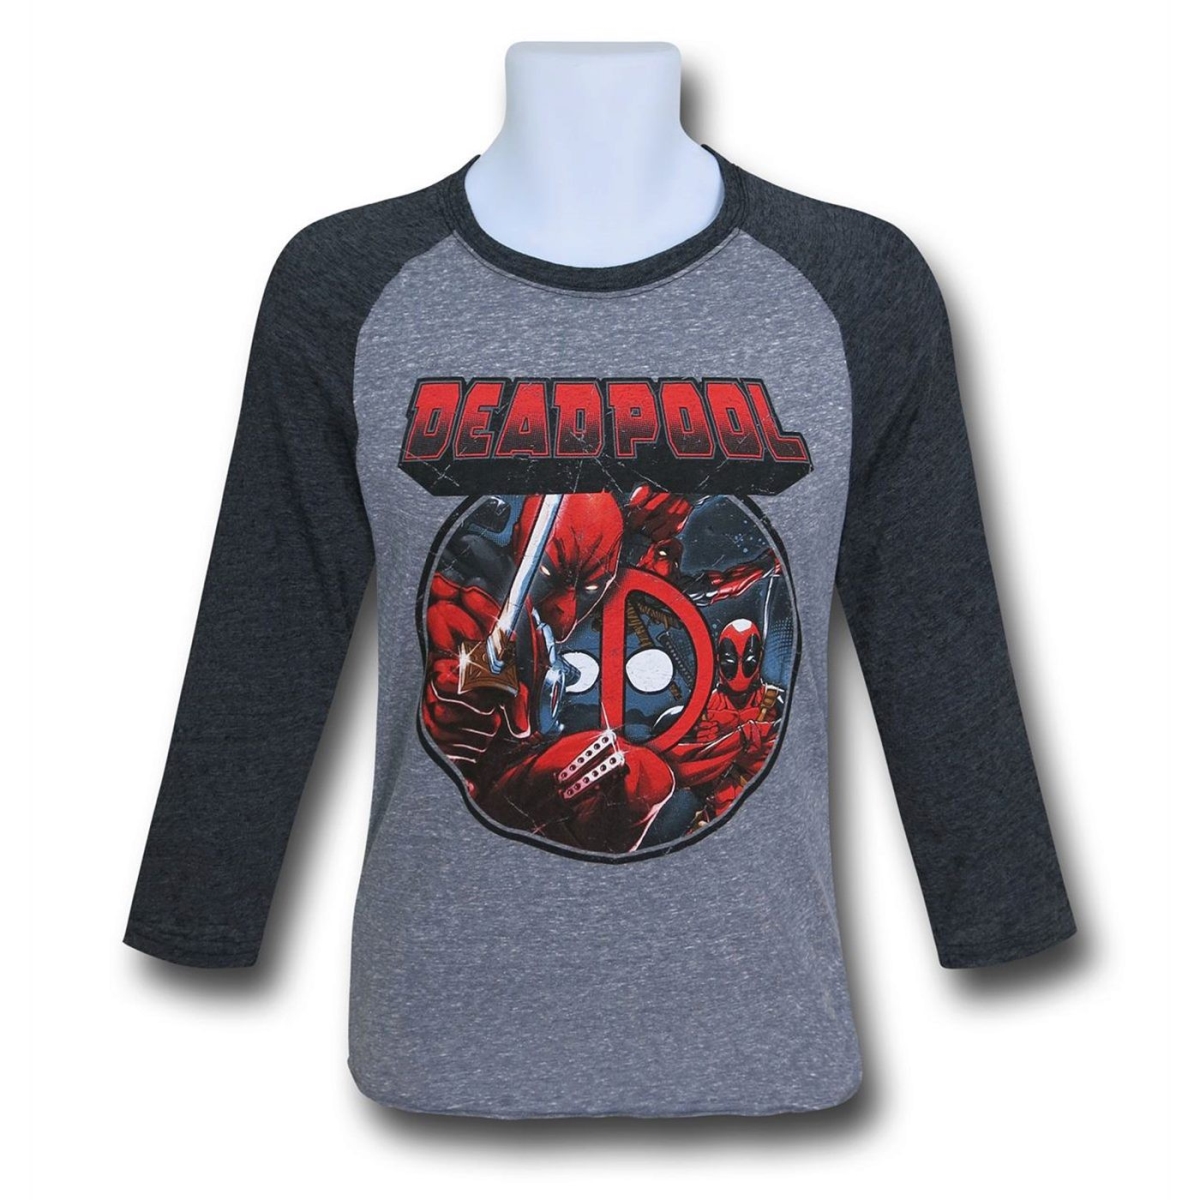 Deadpool On The Wall T Shirt On Fye Com Fandom Shop - deadpool shirt roblox